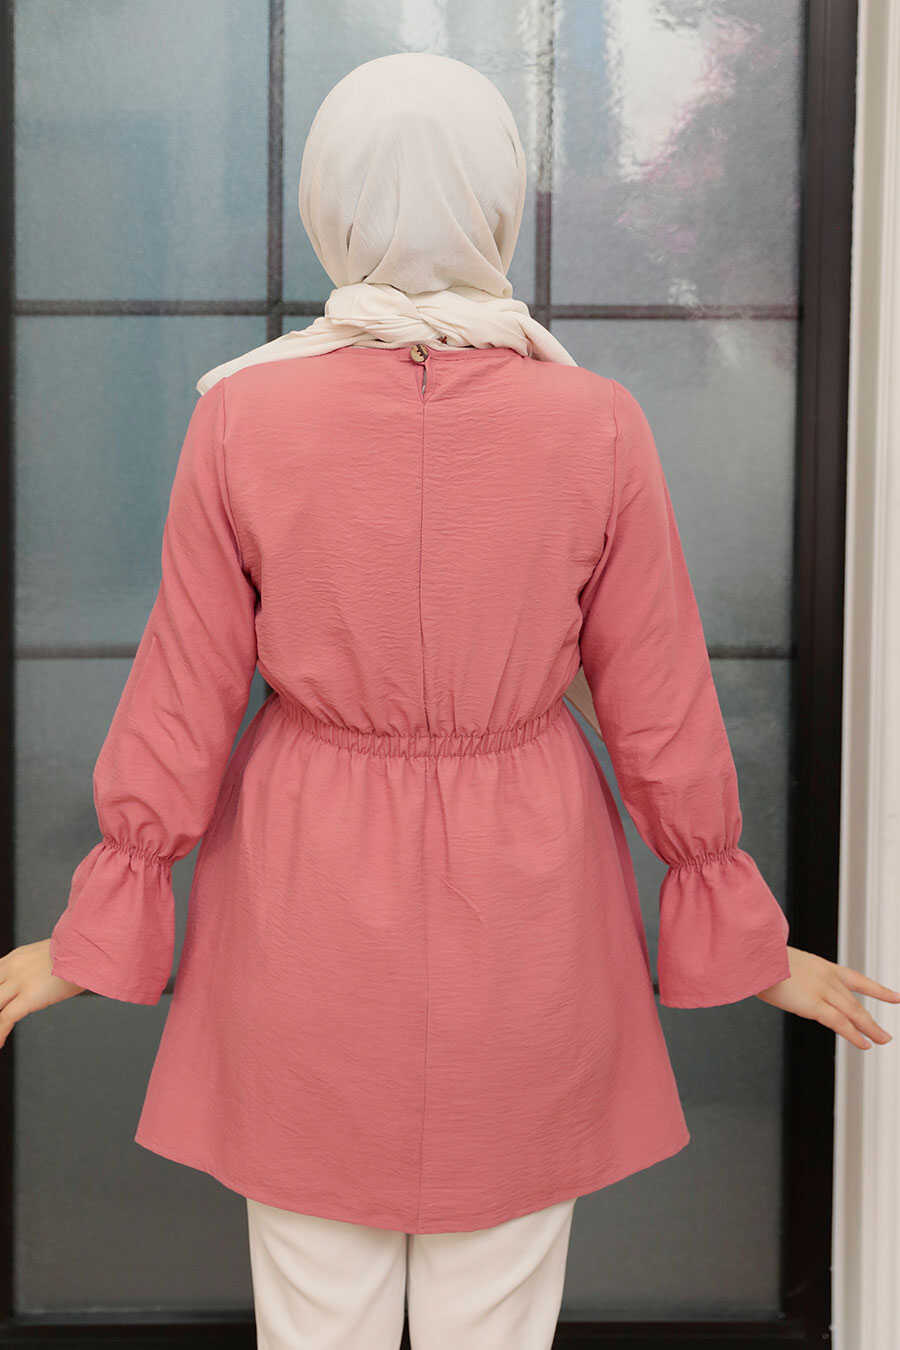 Dusty Rose Hijab Tunic 40461GK